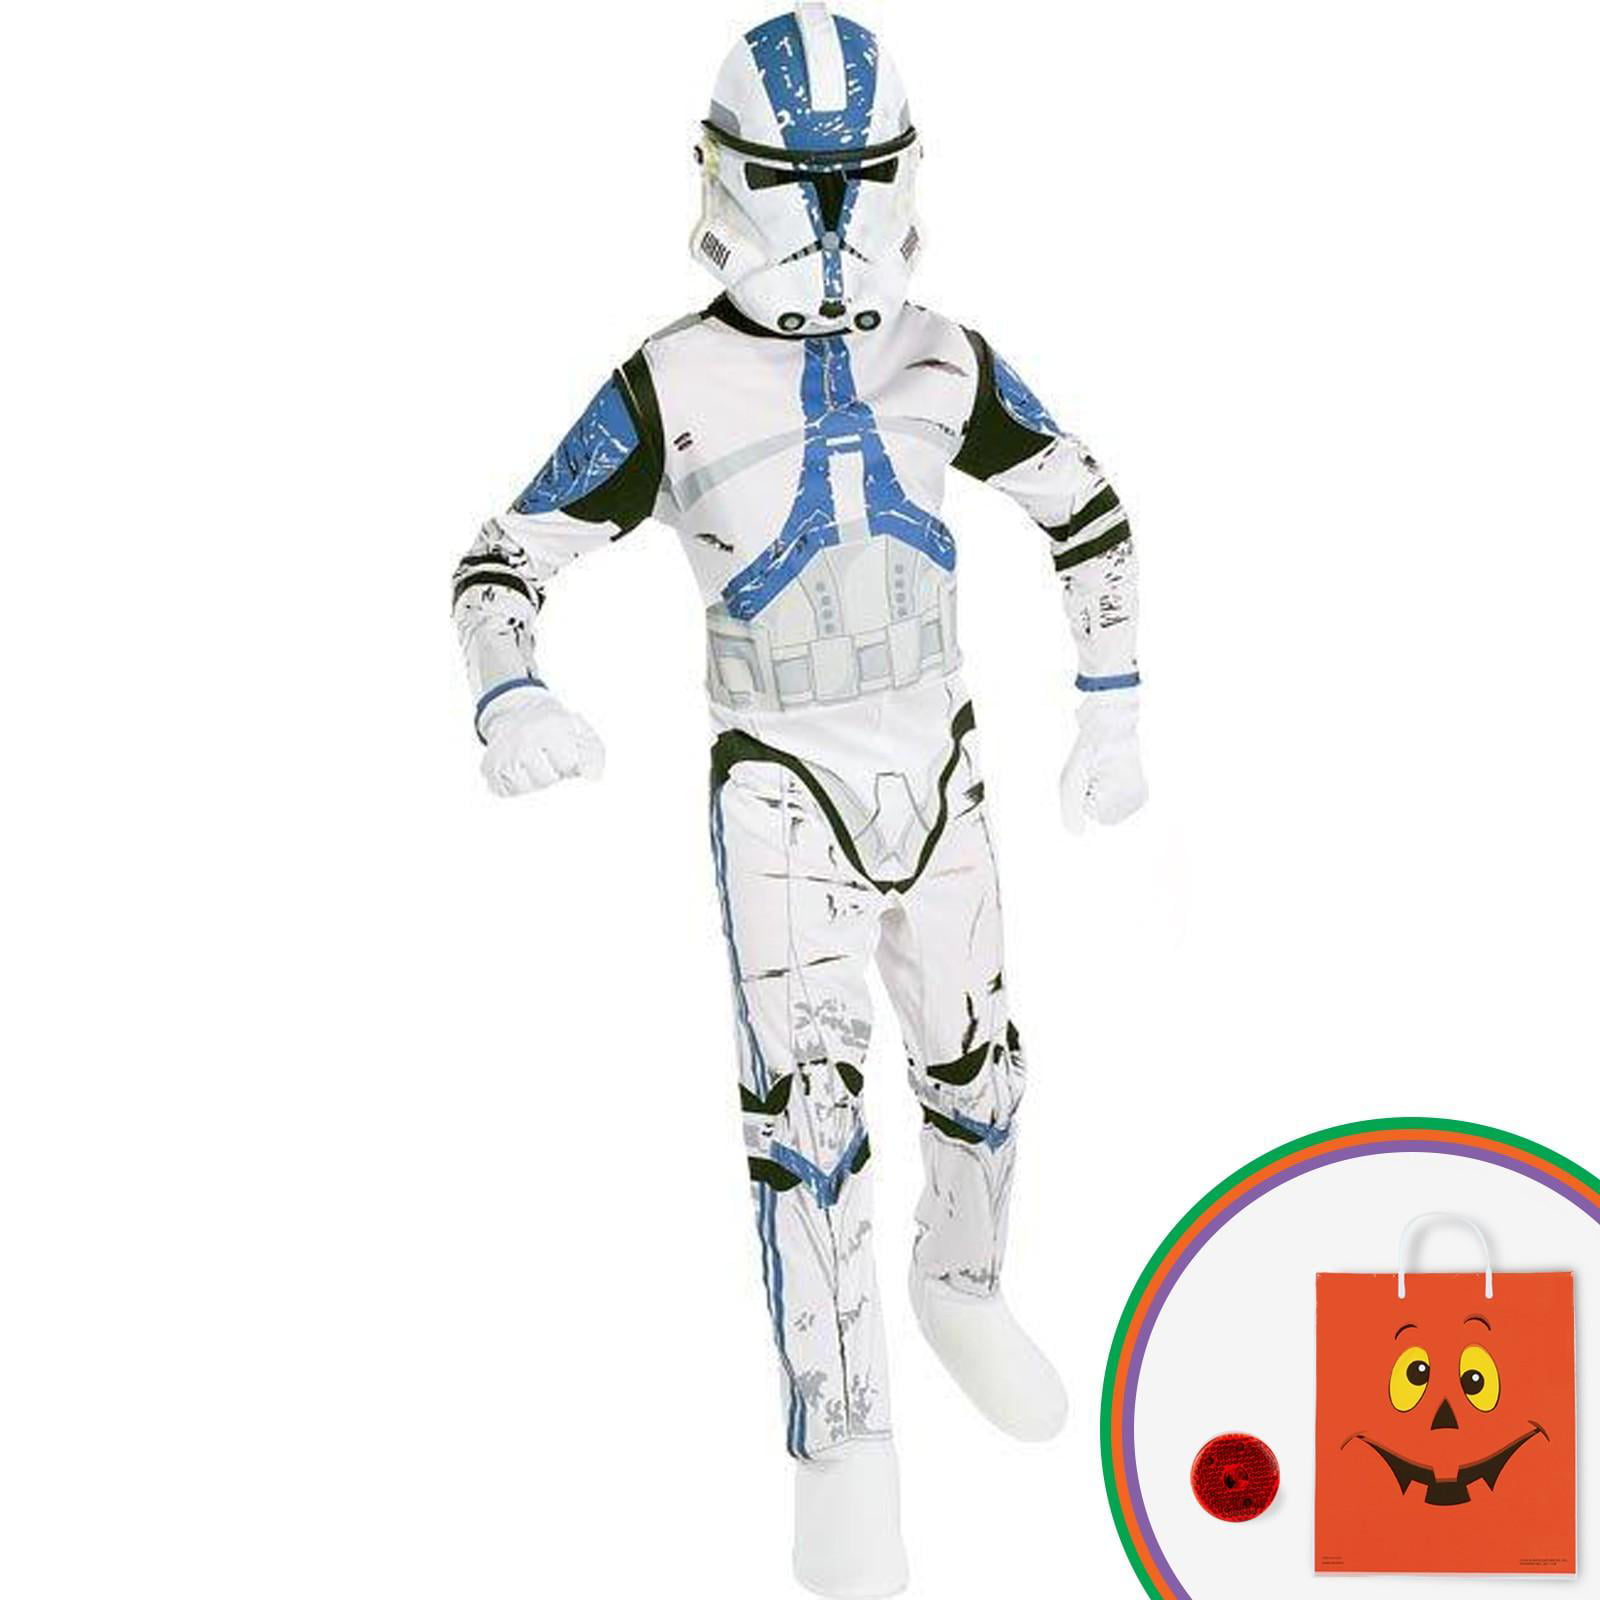 New Star Wars "The Last Jedi" Executioner Trooper Deluxe Child Costume M 8-10 